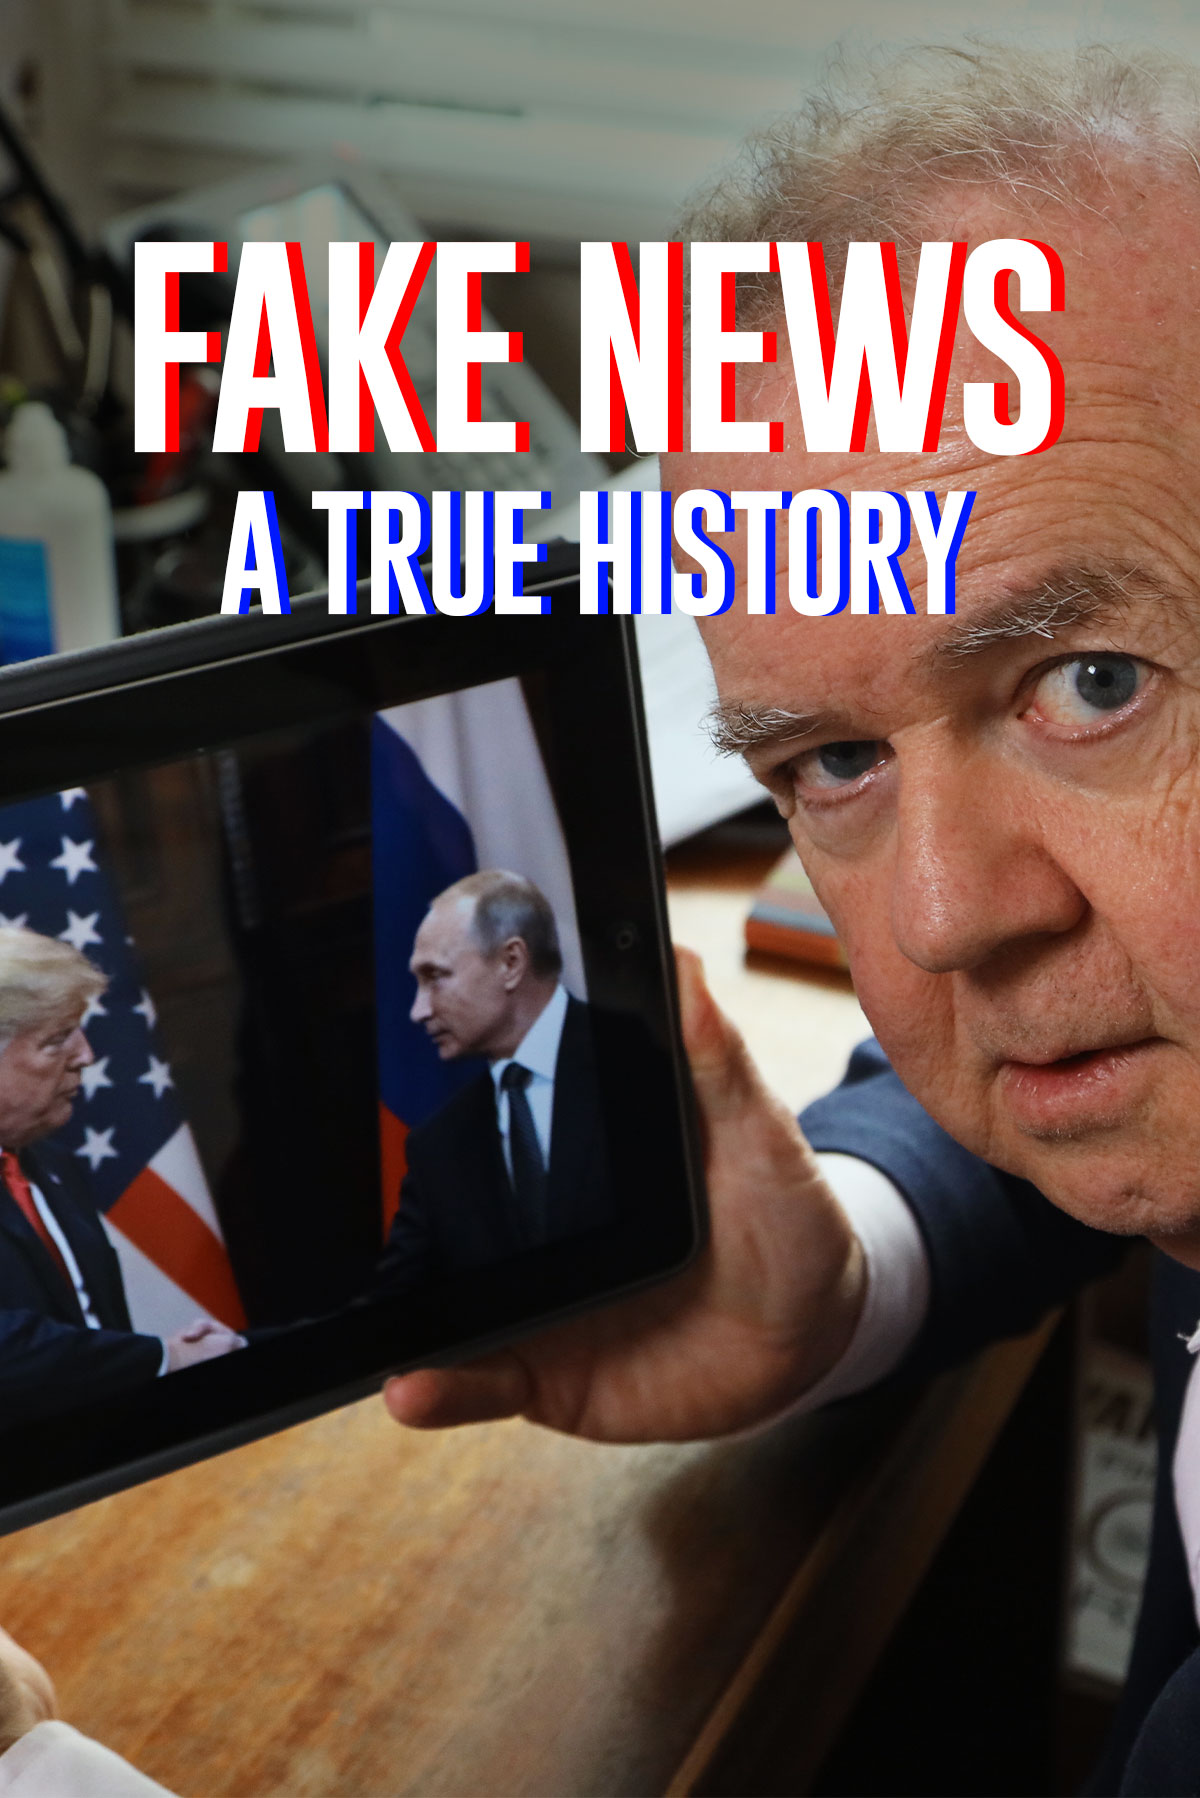 Fake News: A True History